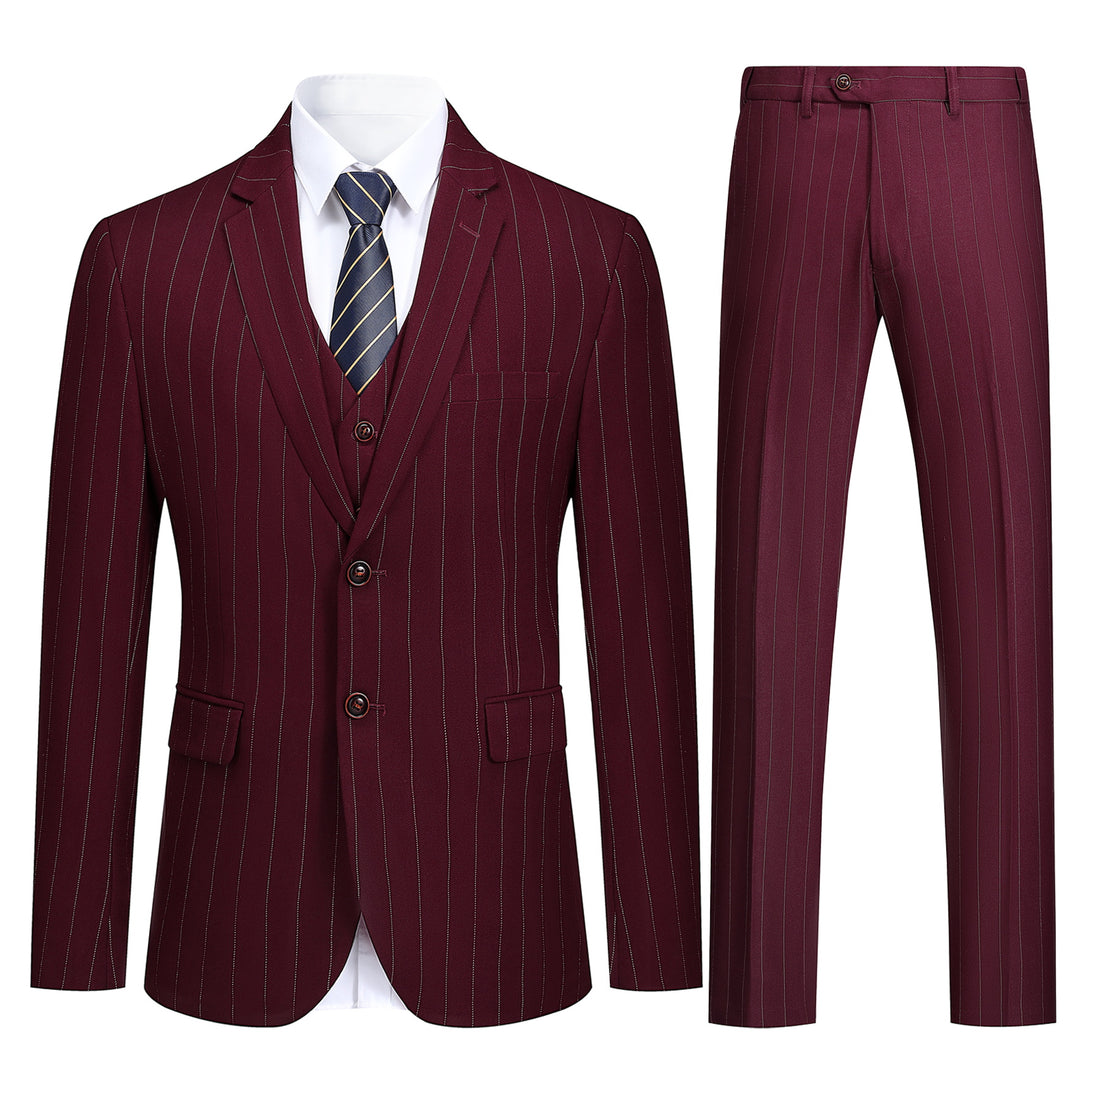 3-Piece Red Suit Stripe Design Suit